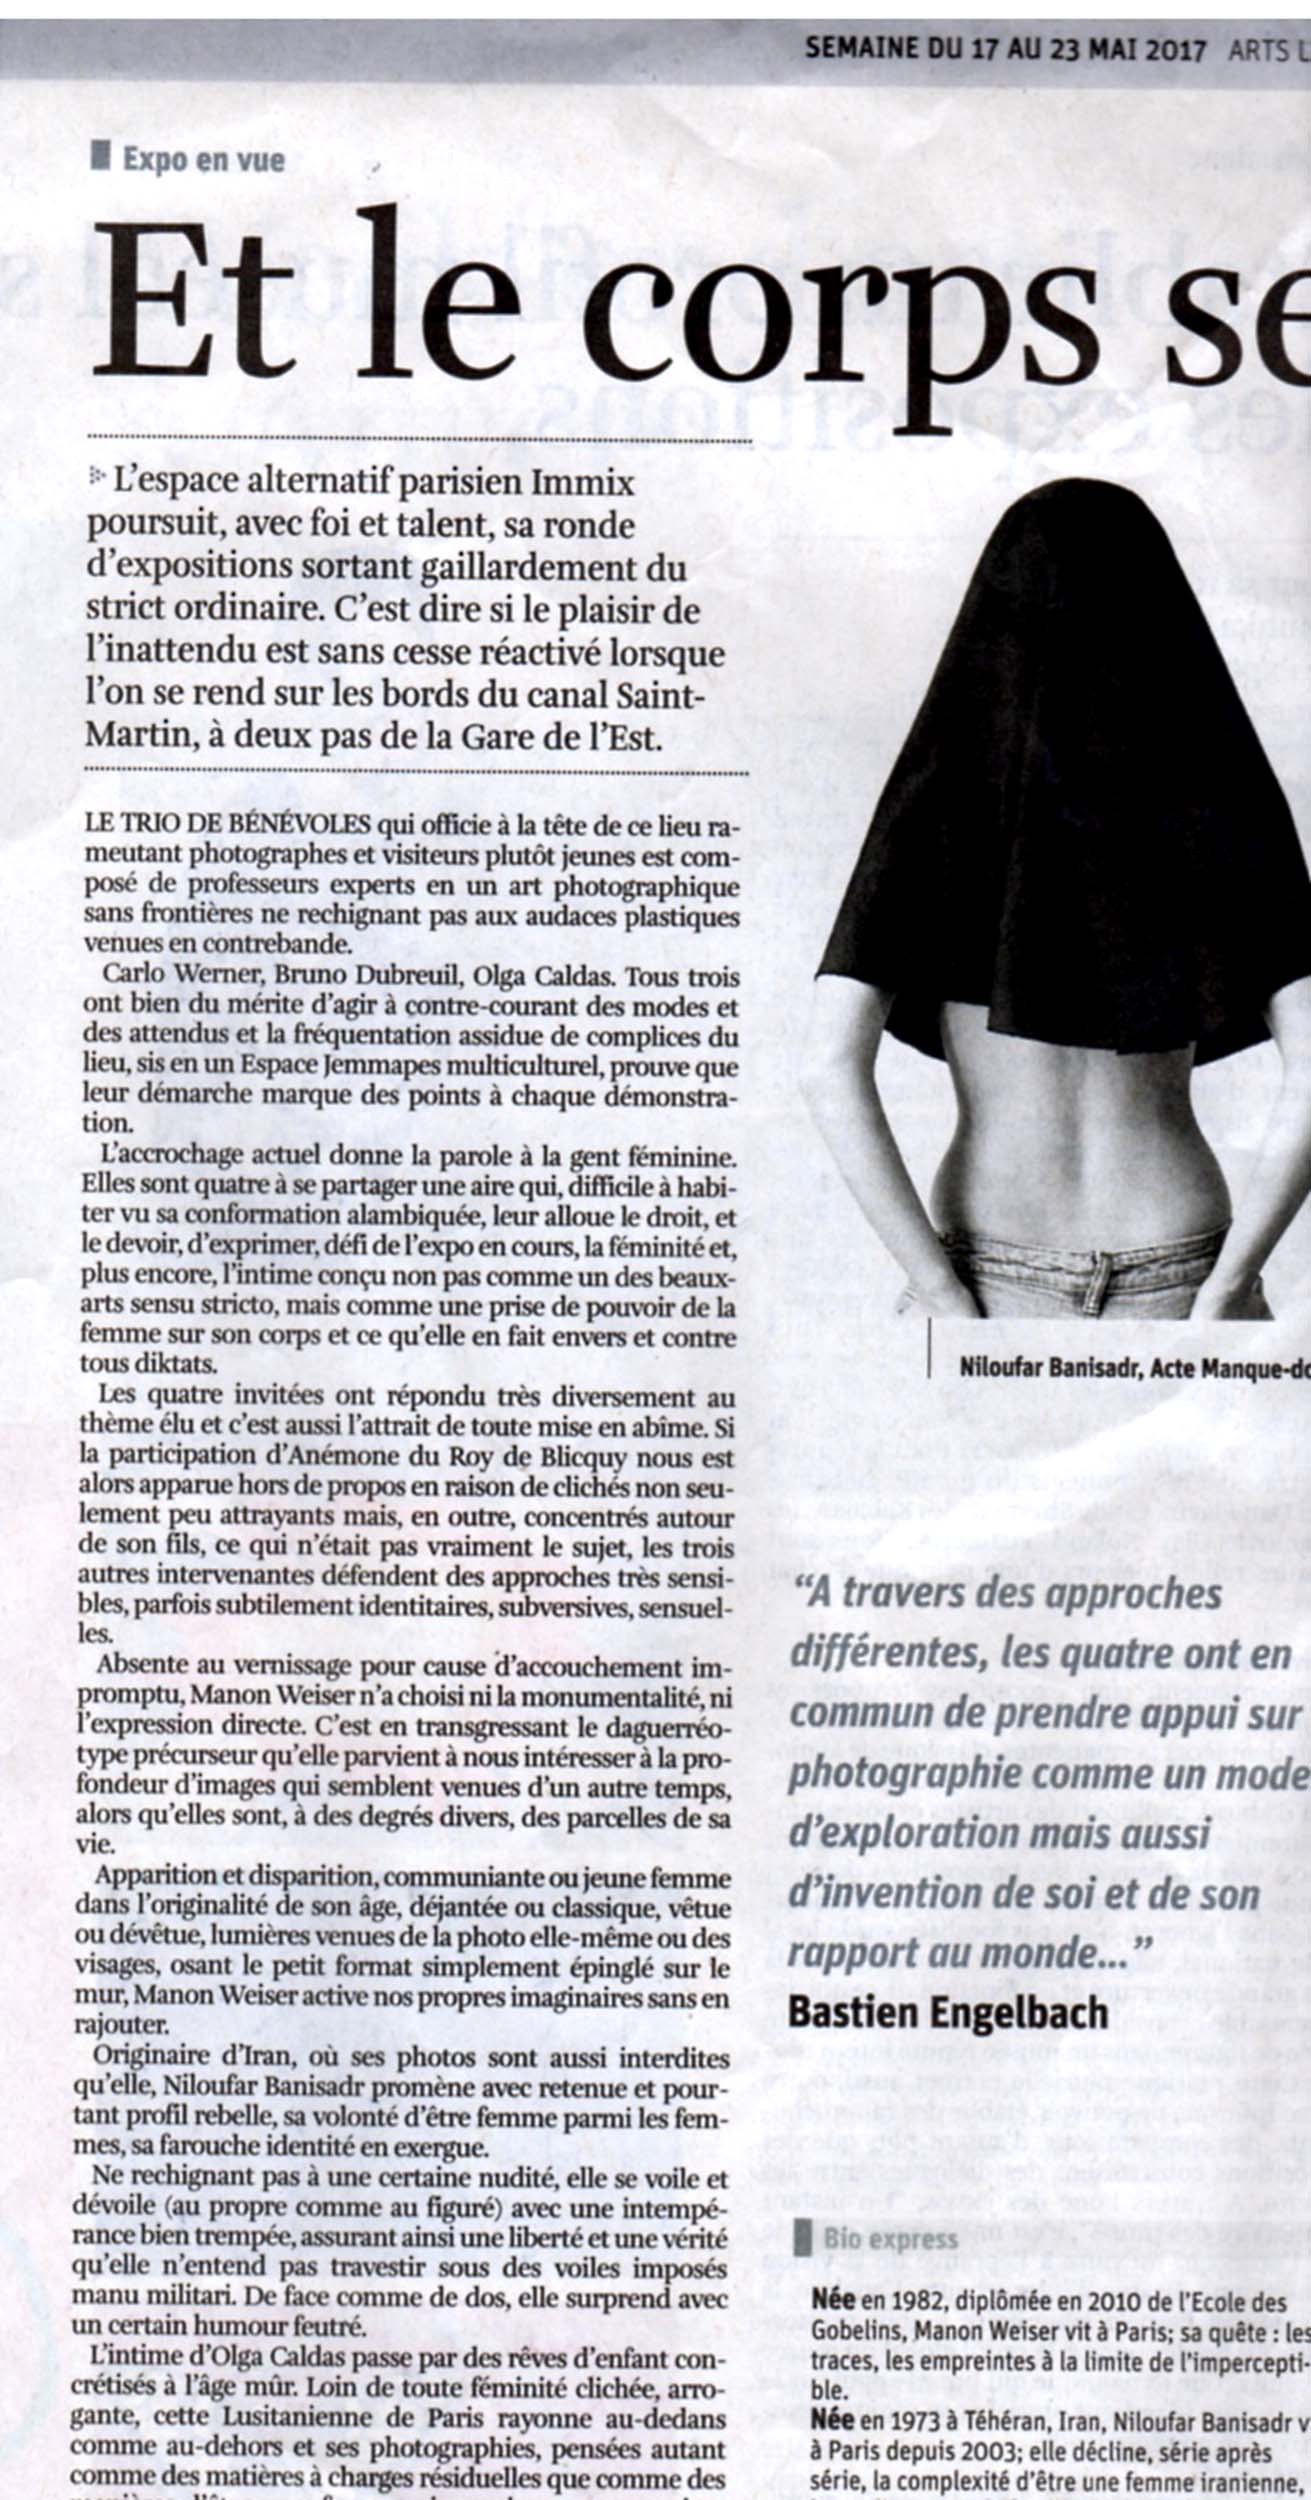 Niloufar Banisadr press article on La libre Belgique